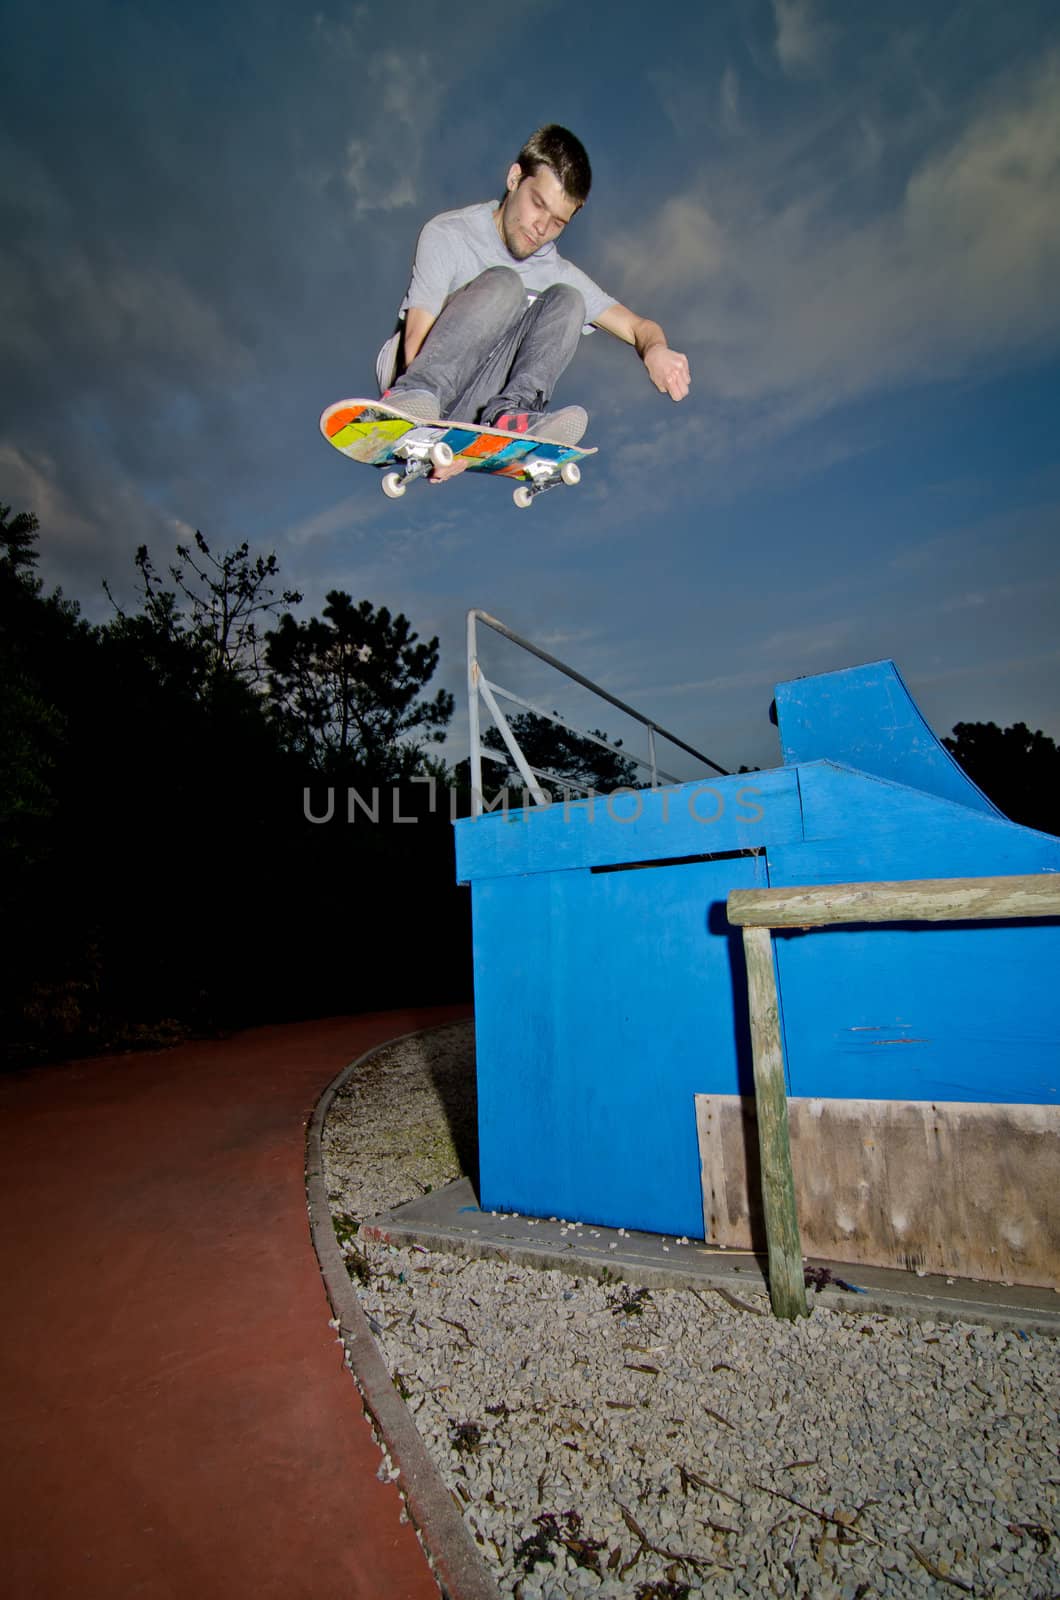 Skateboarder flying over a fap on sunset at the local skatepark.